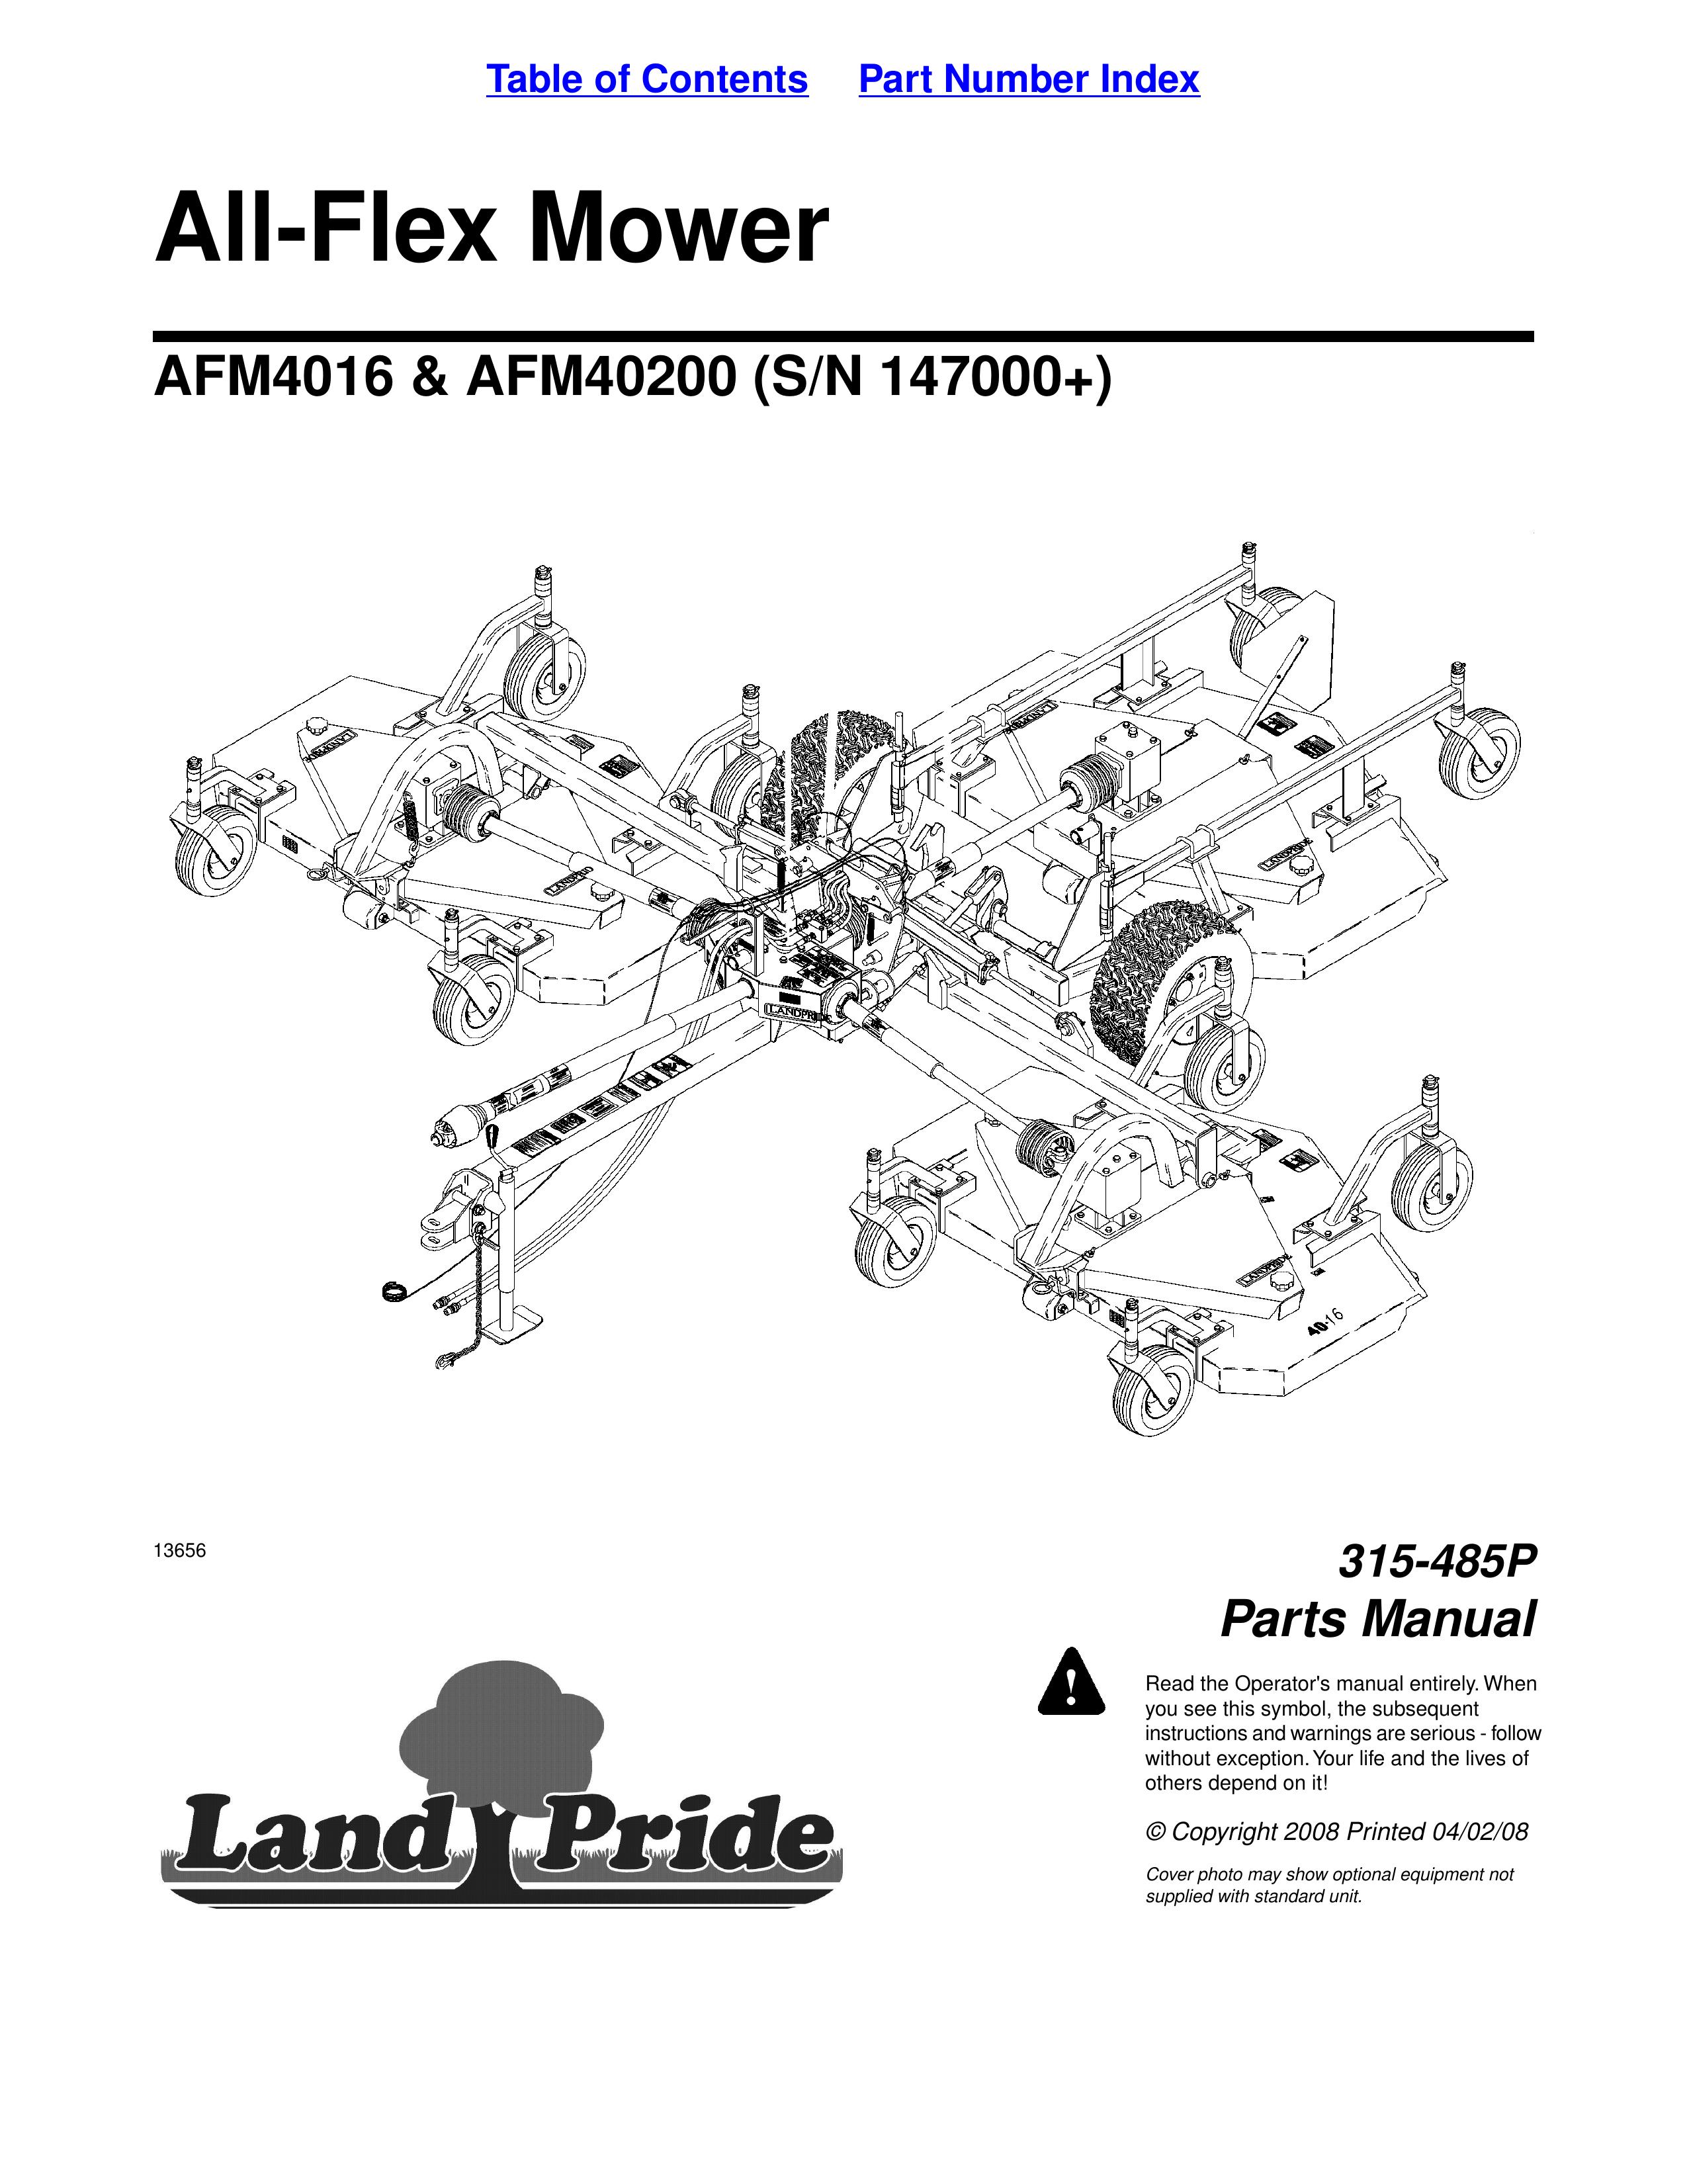 Land Pride AFM40200 Lawn Mower User Manual